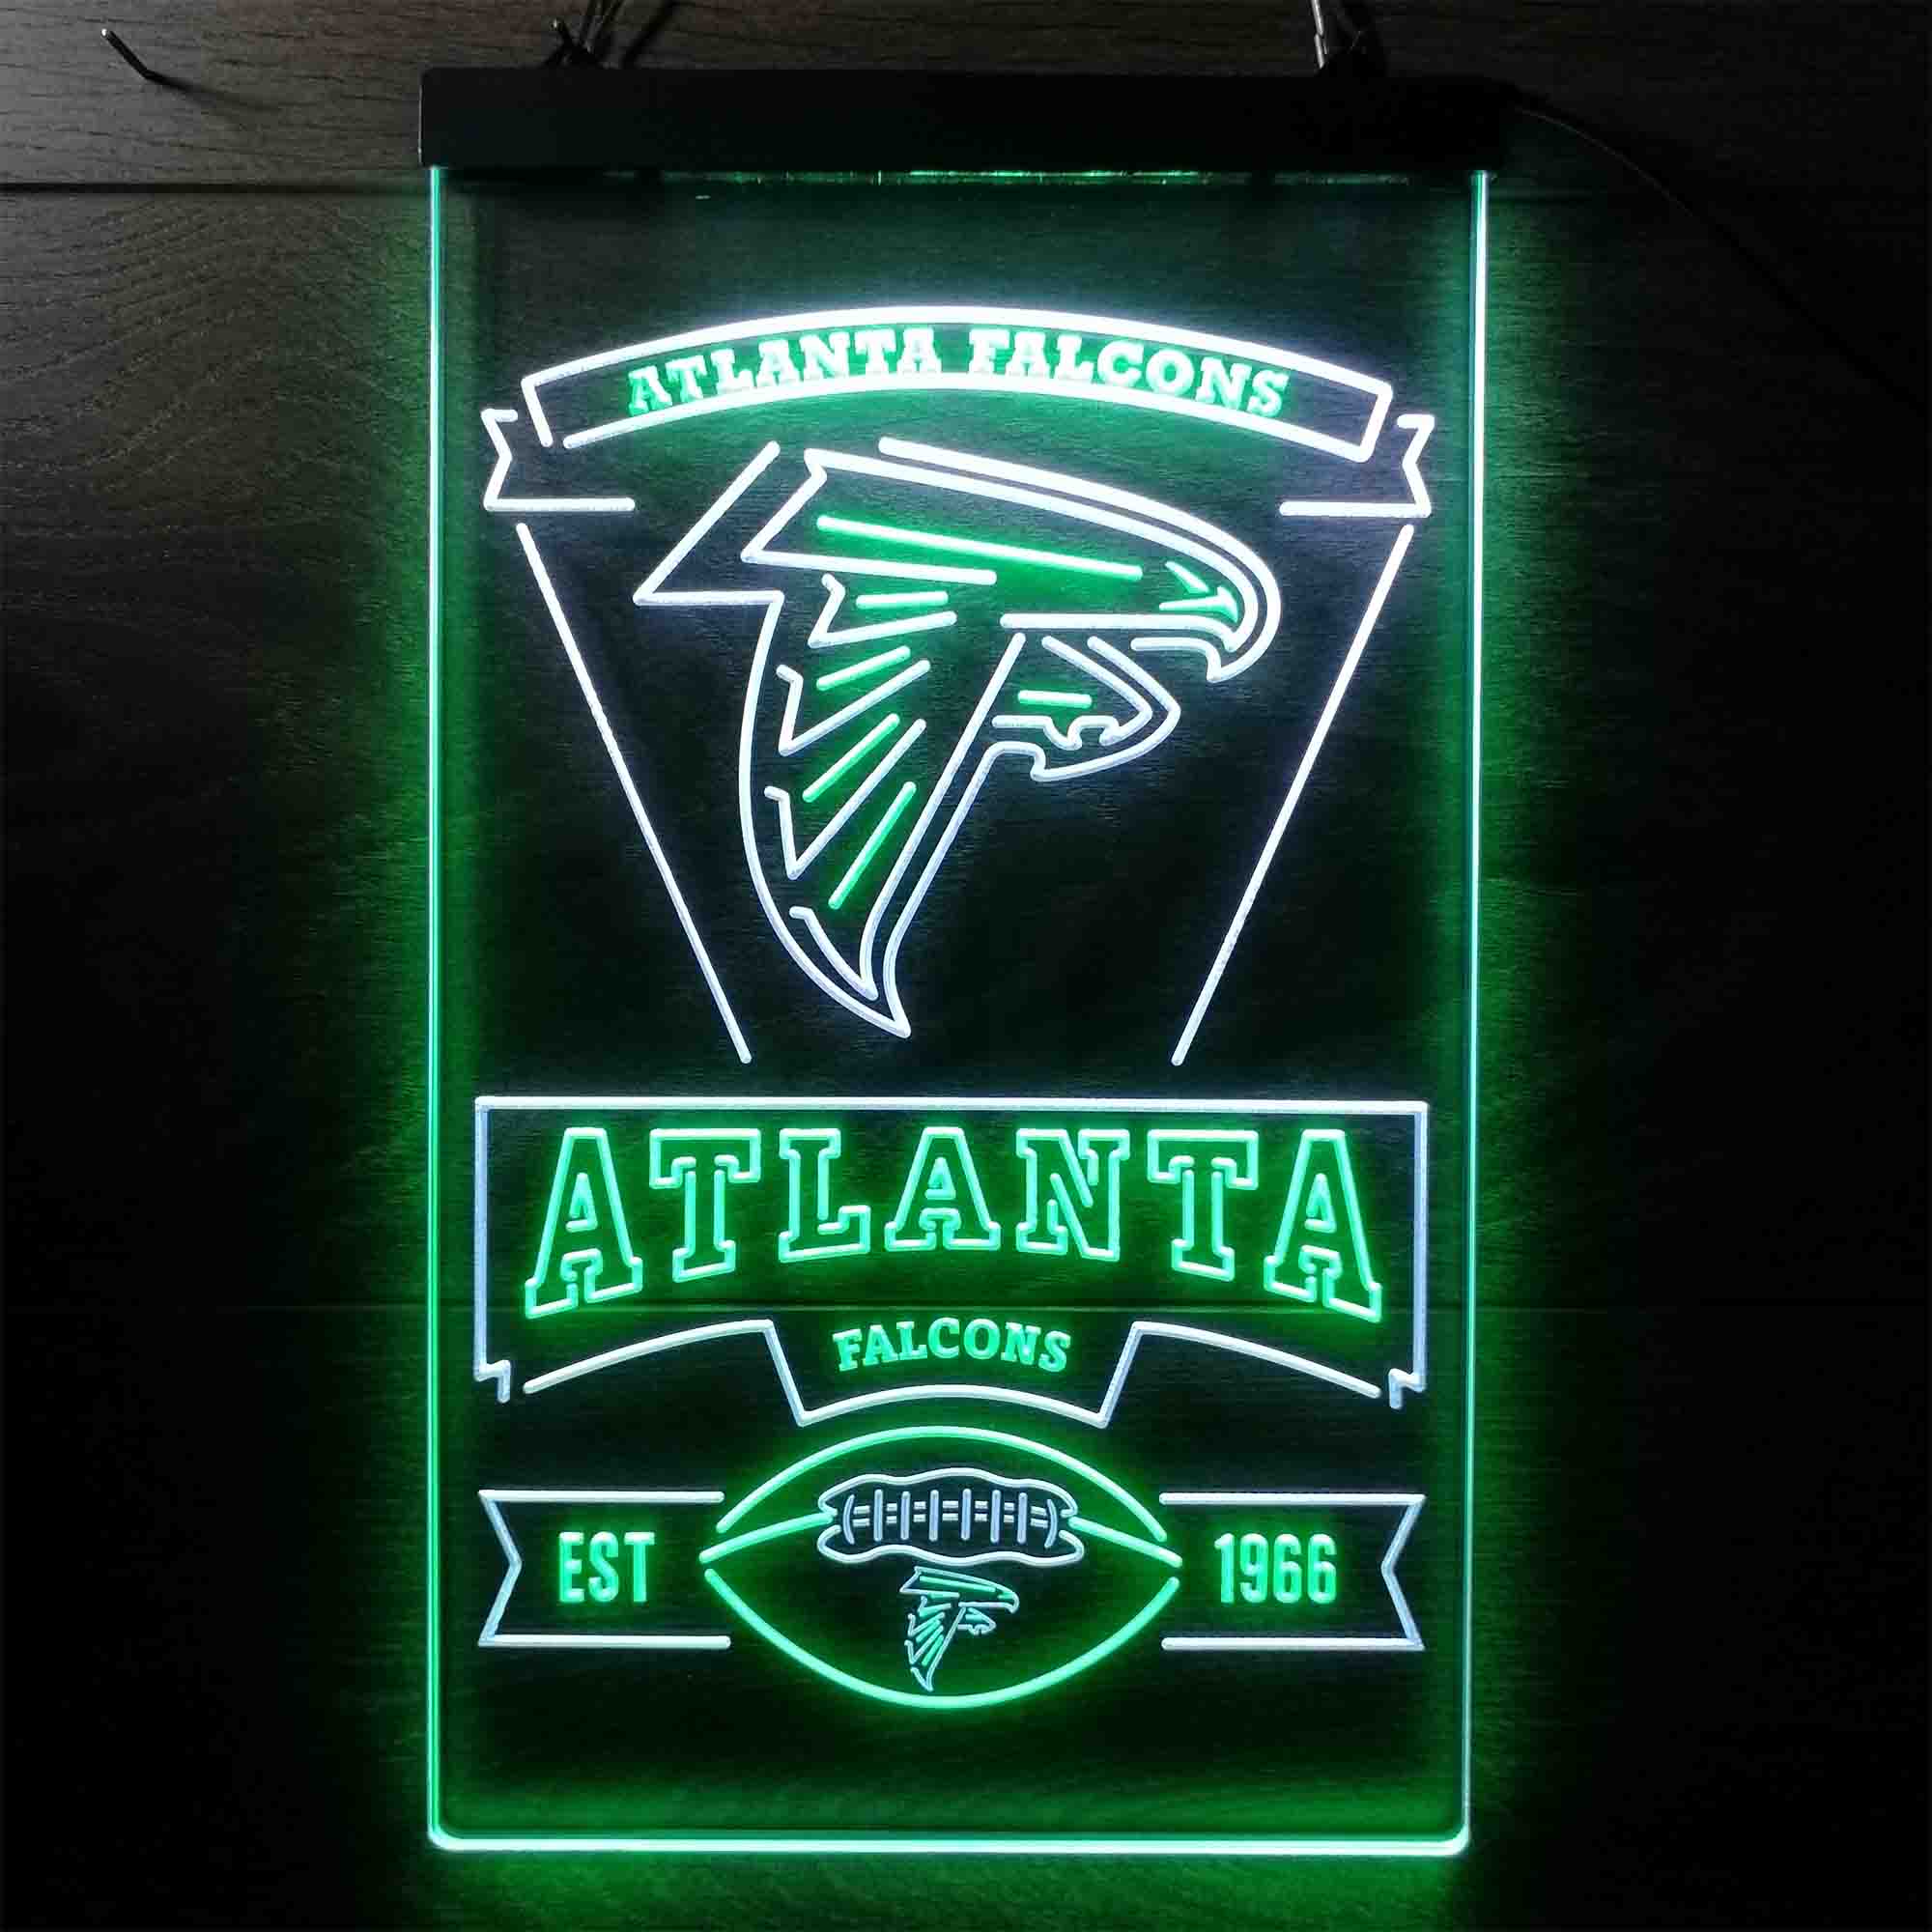 Atlanta Falcons Est. 1966 LED Neon Sign